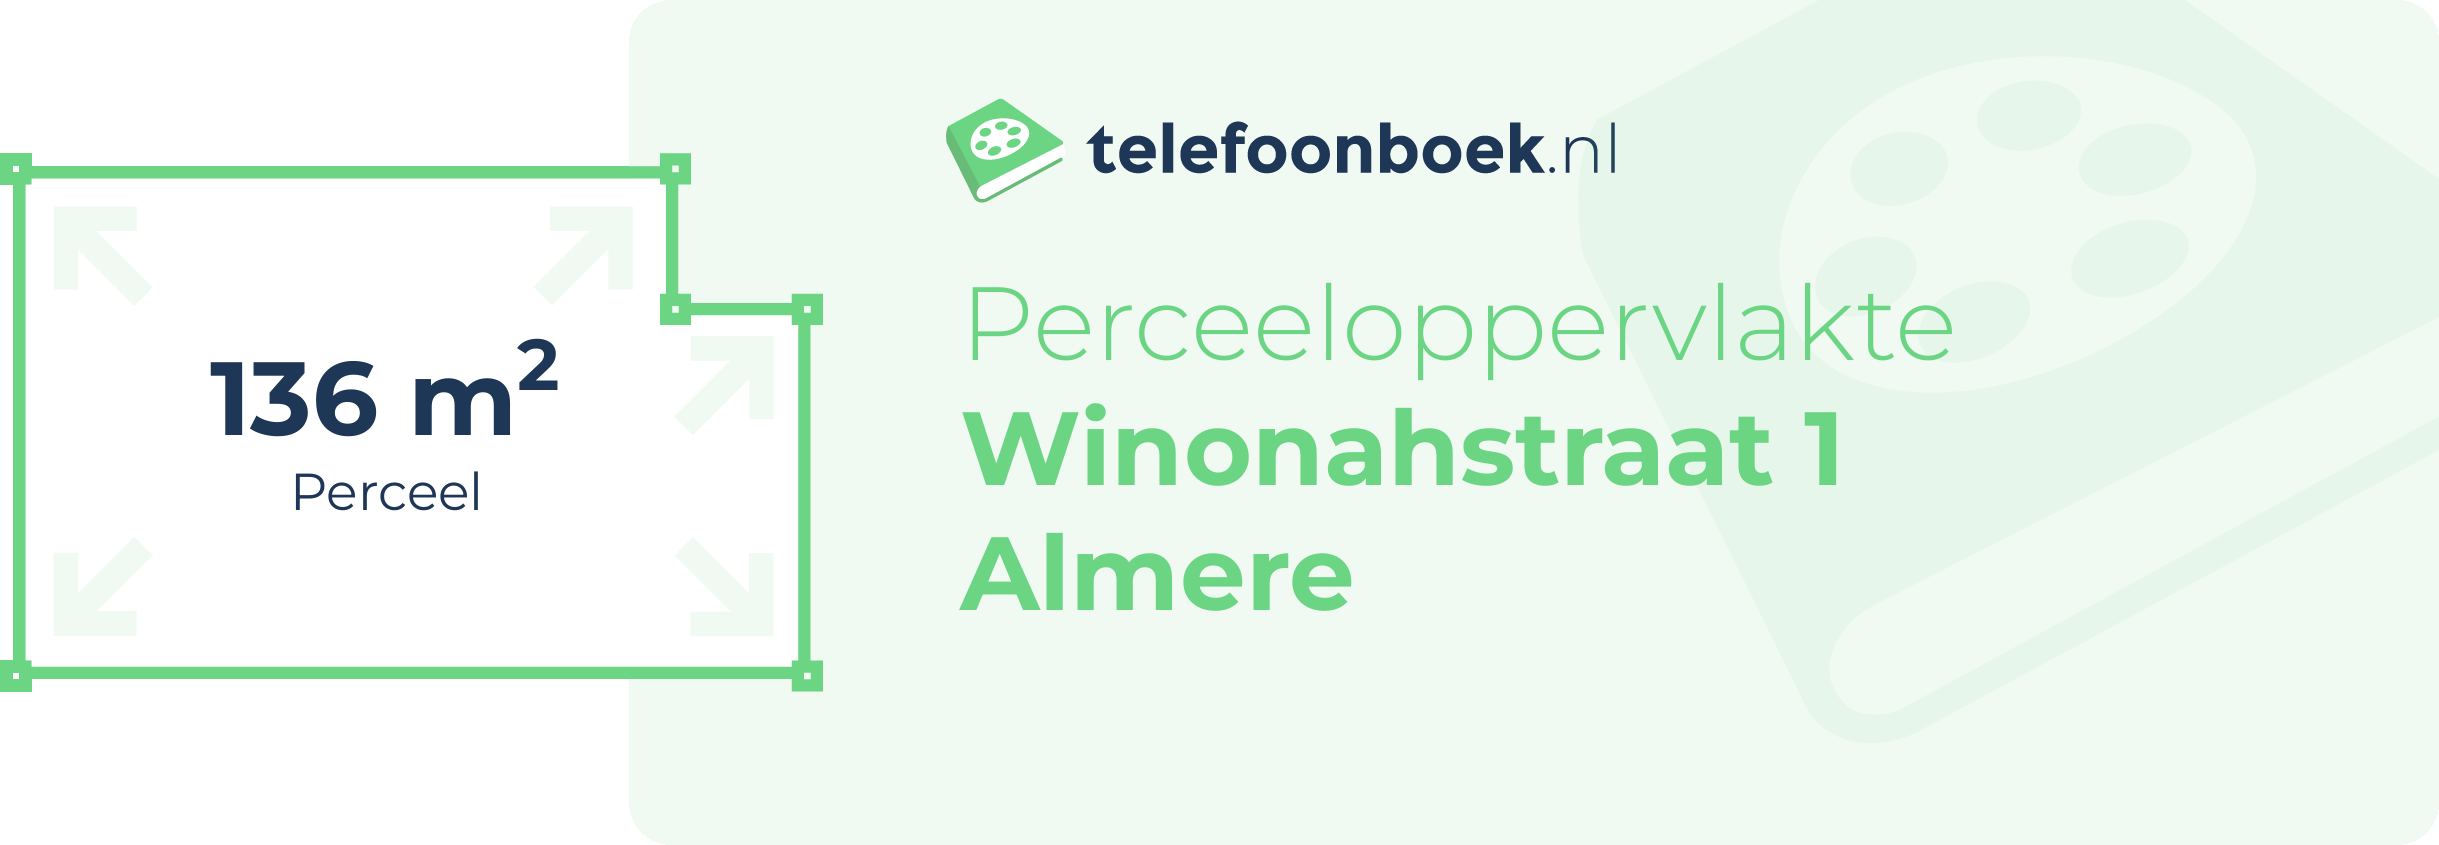 Perceeloppervlakte Winonahstraat 1 Almere